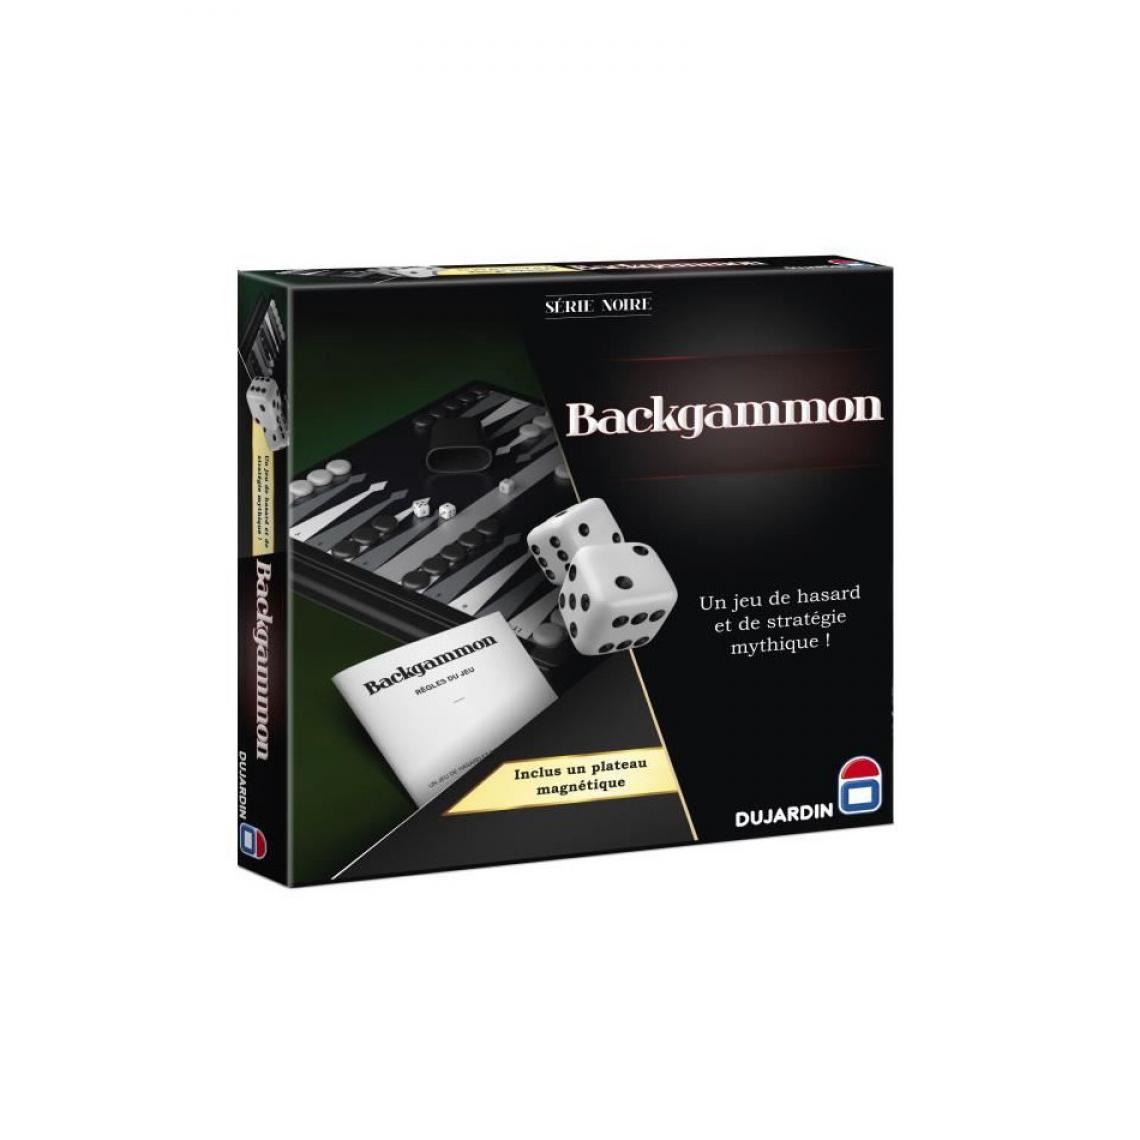 Dujardin - Serie Noire Backgammon - Jeux d'adresse